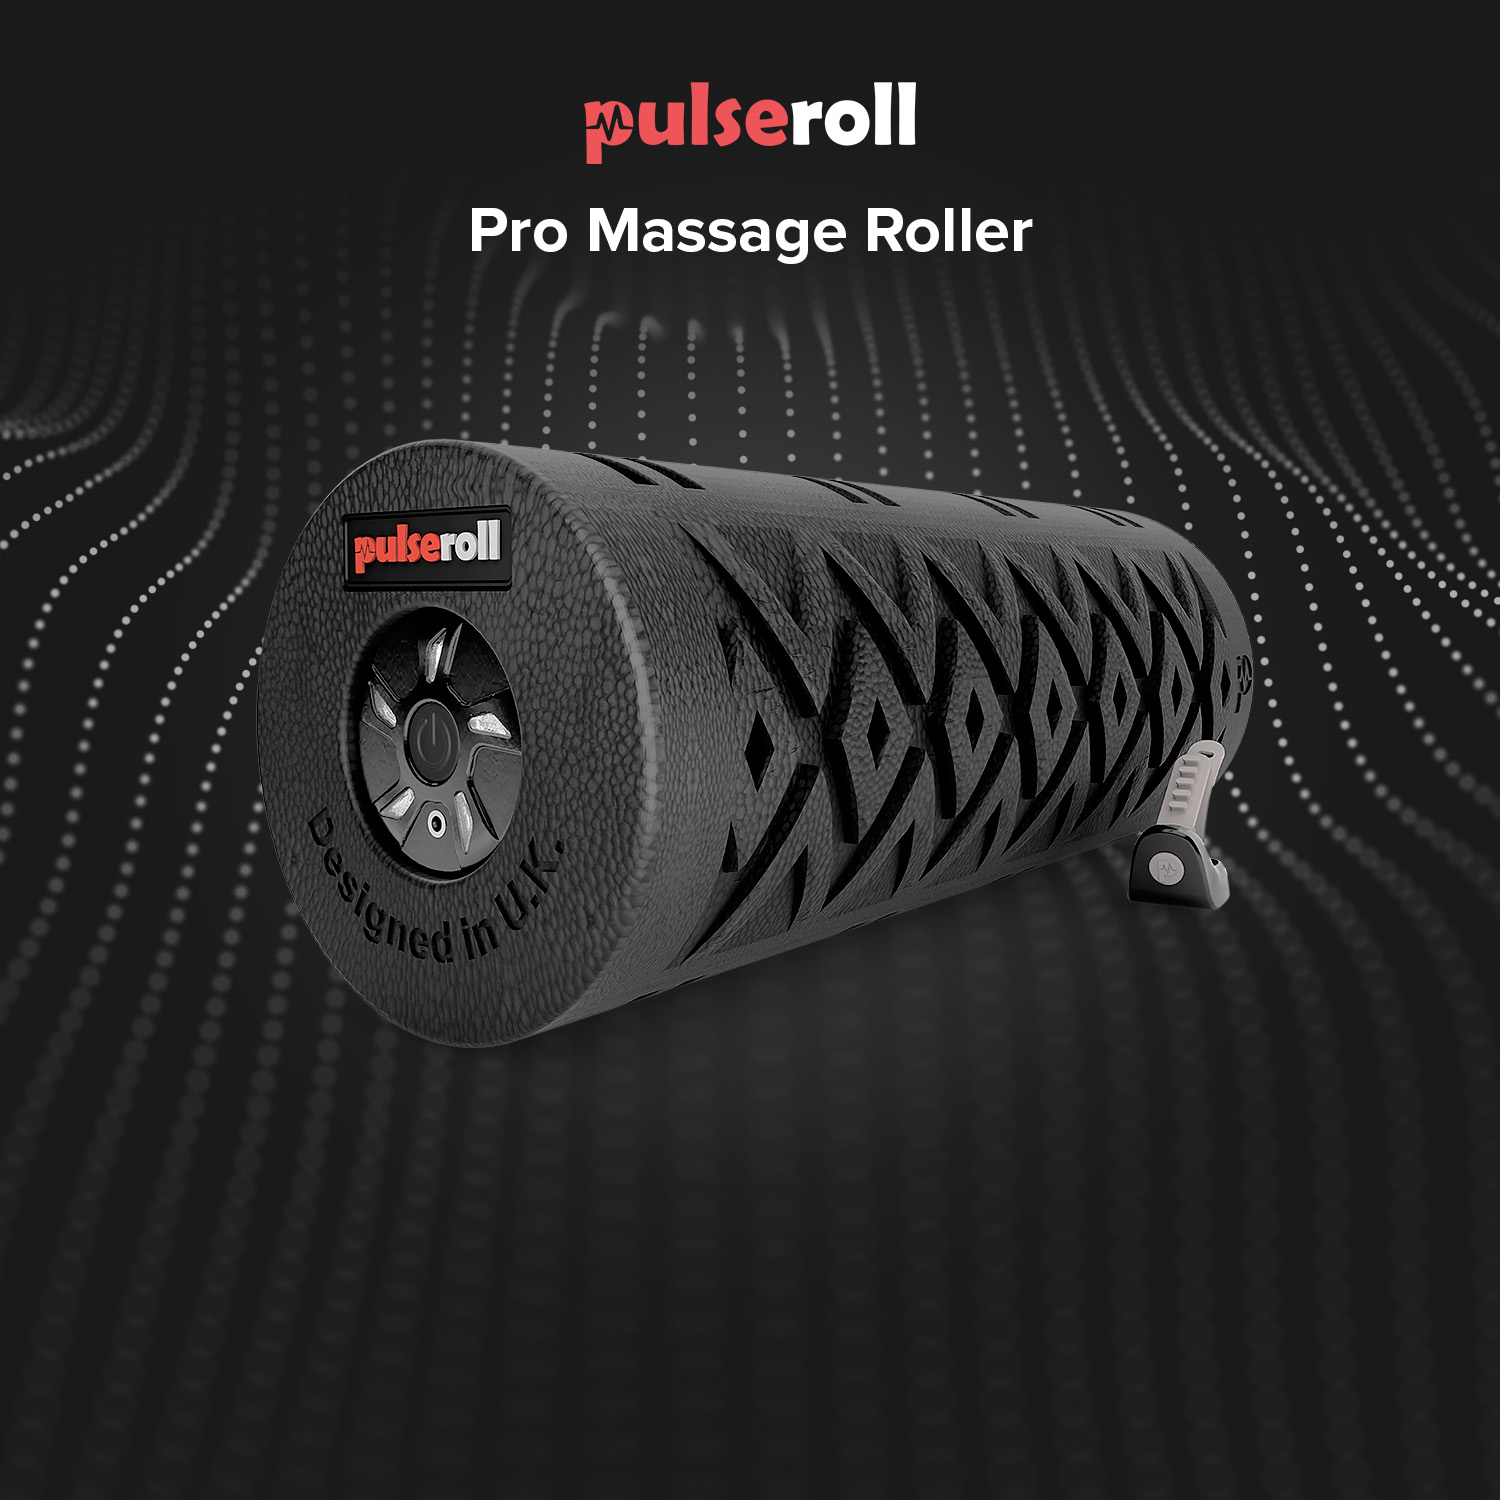 Pro Massage Roller